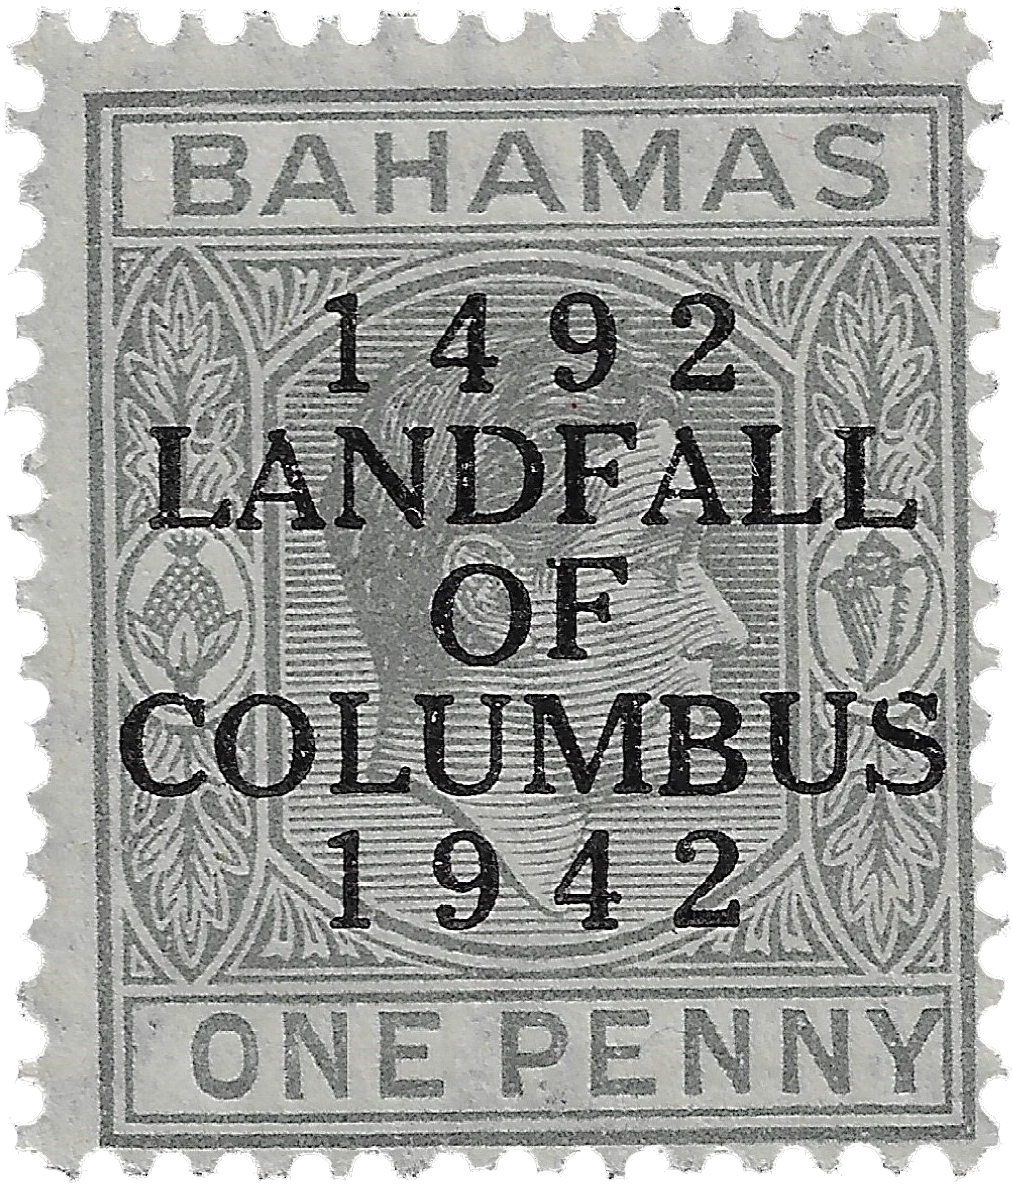 1c 1942, One Penny, 1492 Landfall of Columbus